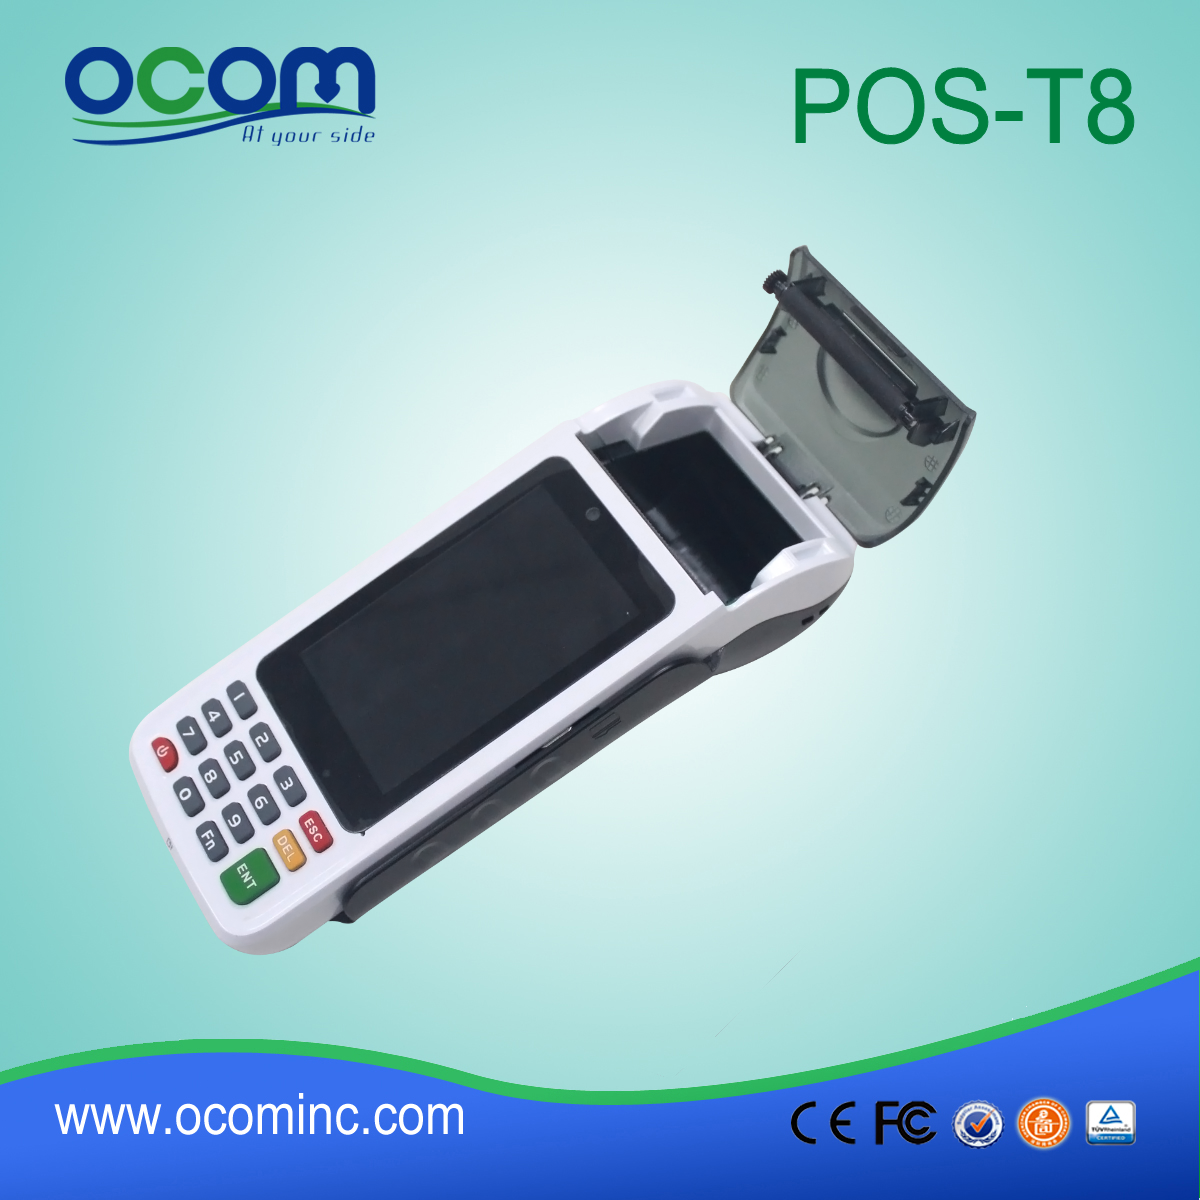 Chine Pos Terminal Fabricant / Portable Terminal / Android Pos Terminal POS-T8